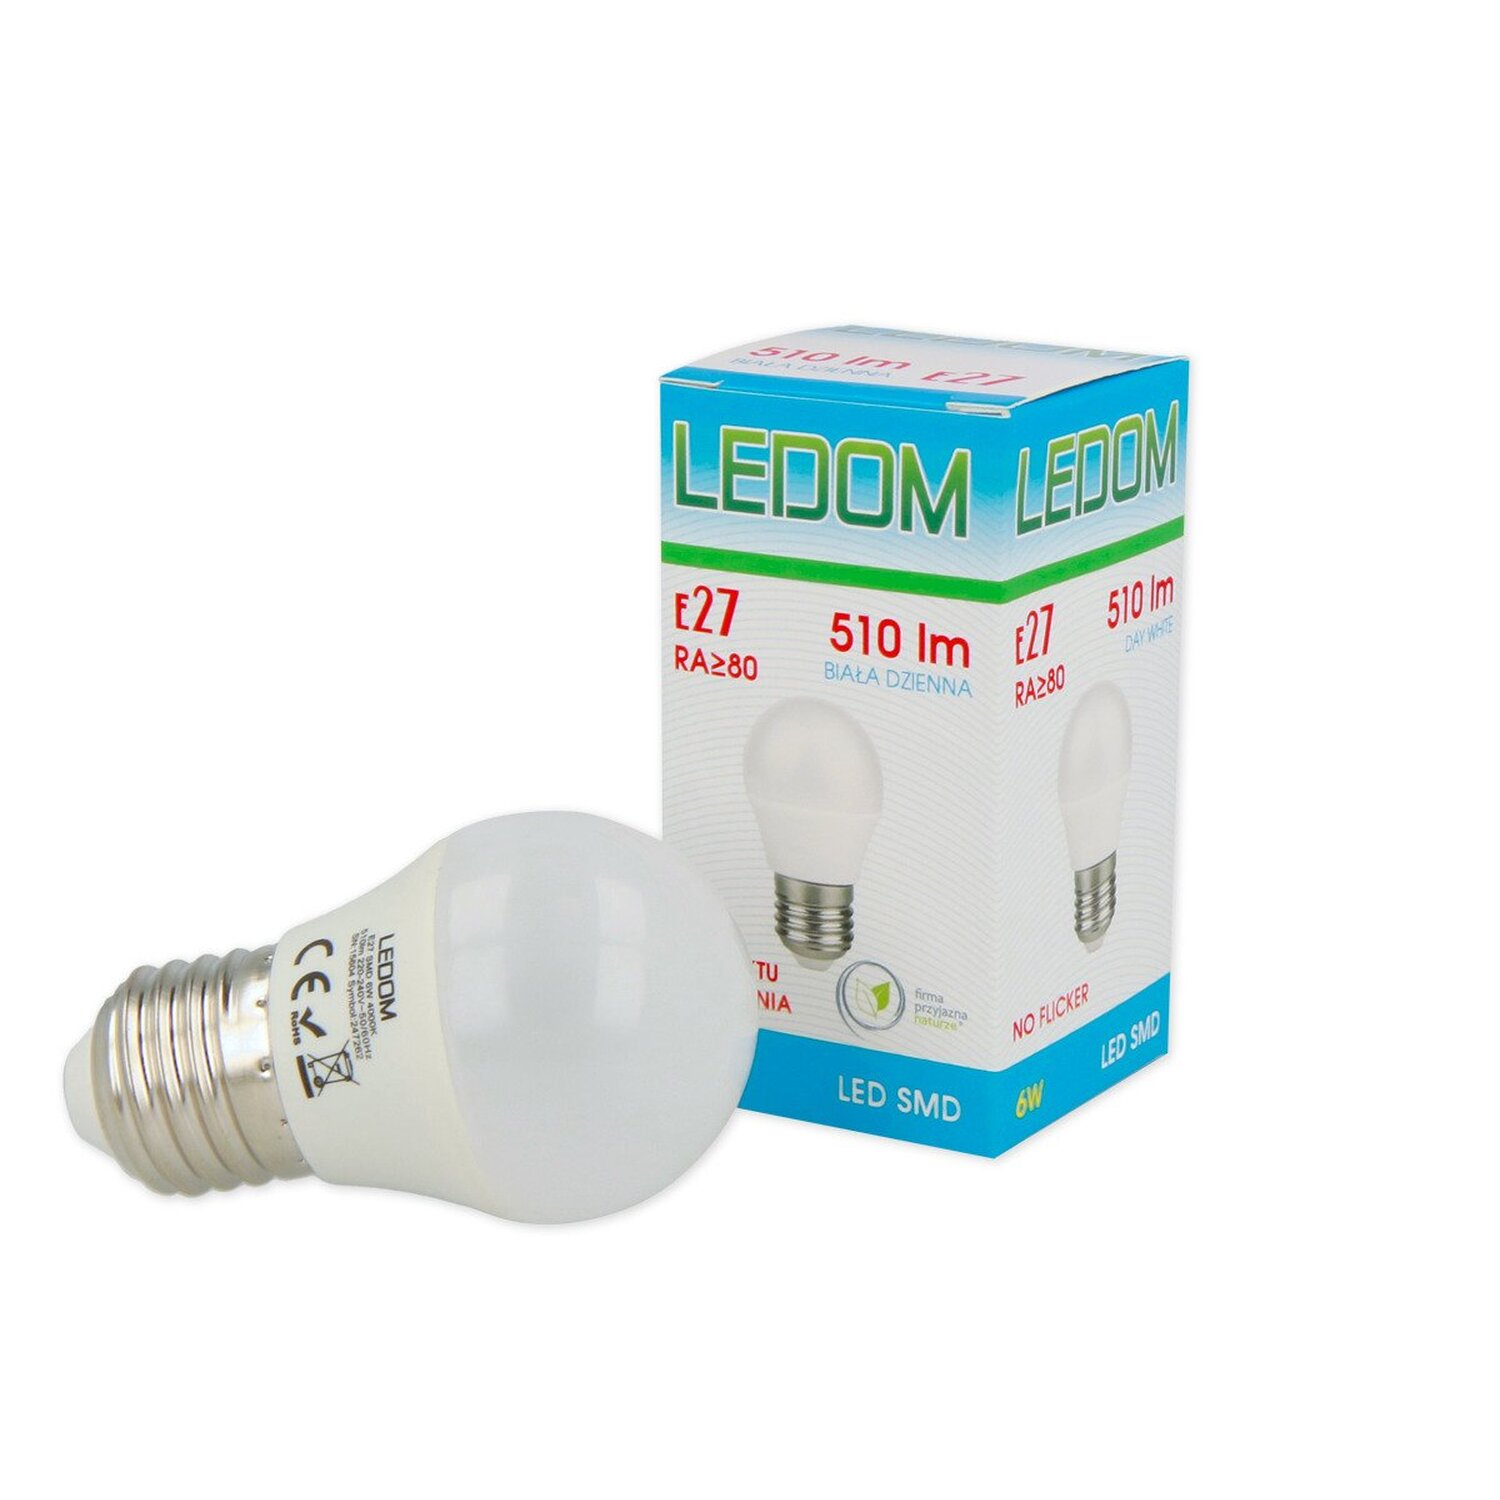 LED LINE 10 LED SMD E27 510 Lumen Leuchtmittel AC 230V 6W 220-240V Stück Neutralweiß Ø45